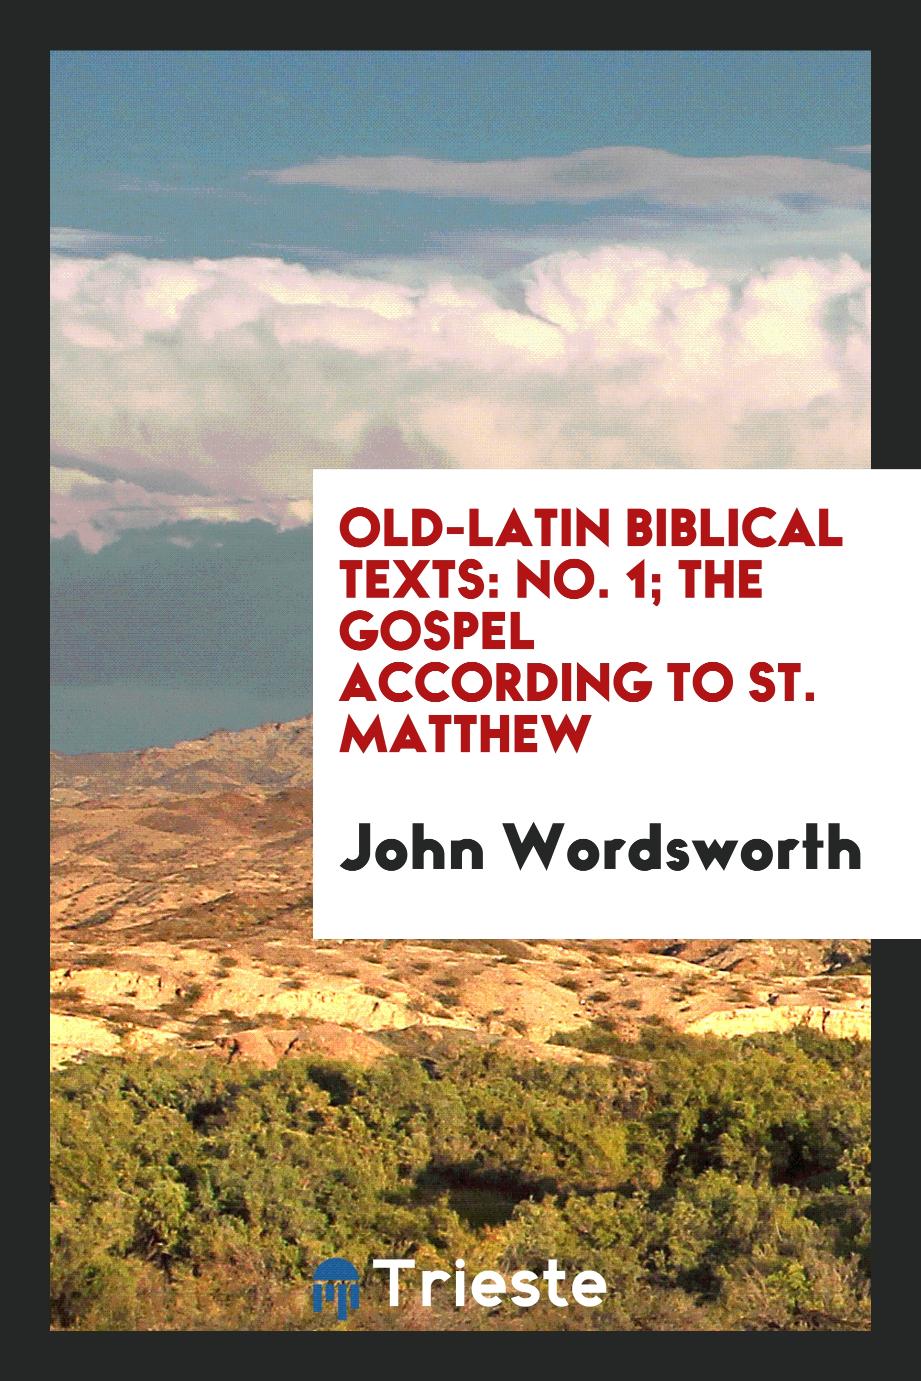 Old-Latin Biblical Texts: No. 1; The Gospel according to St. Matthew